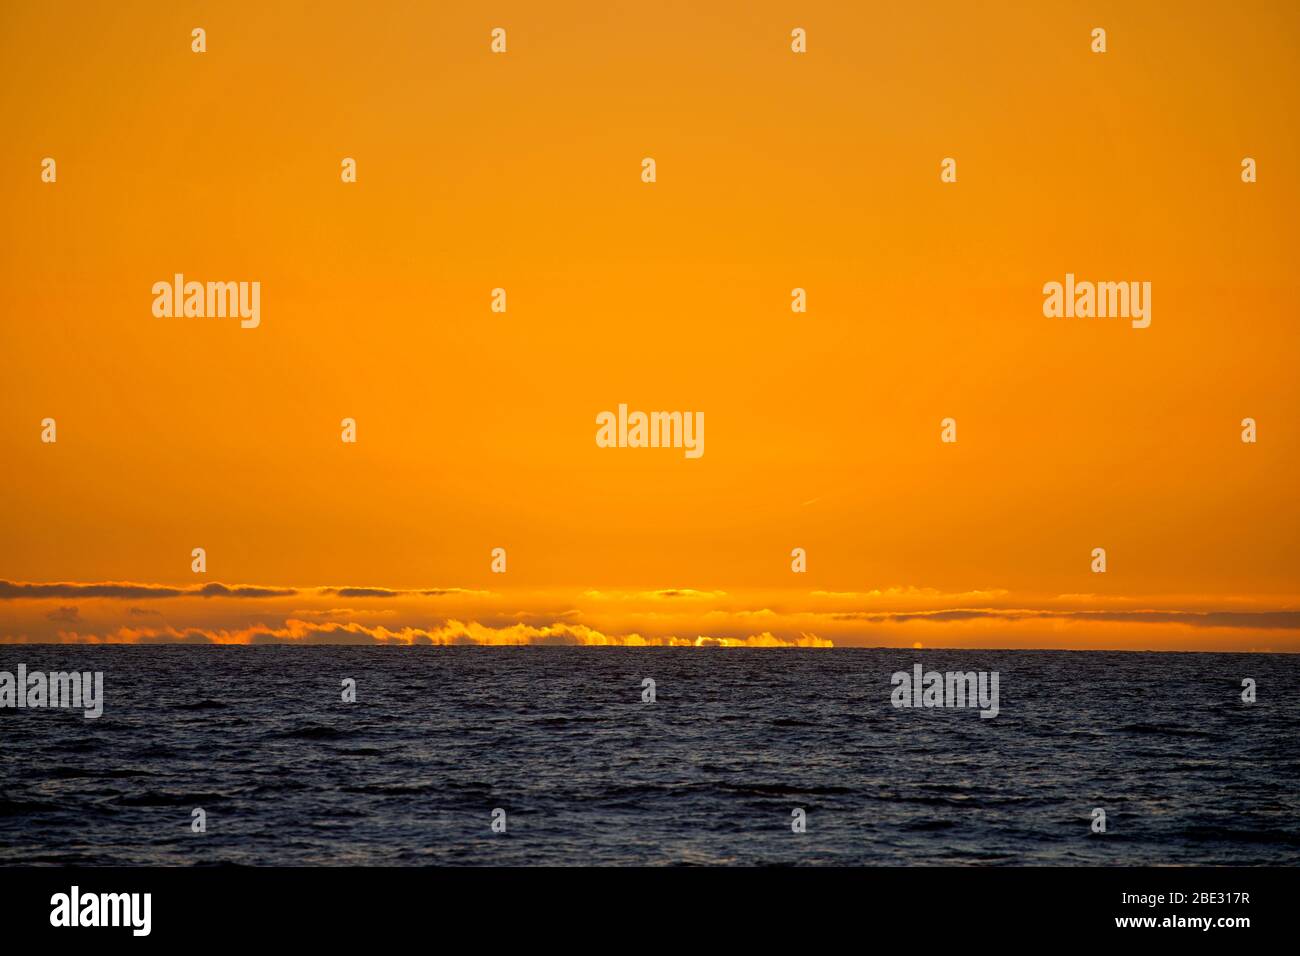 glooming sun rising over the sea Stock Photo